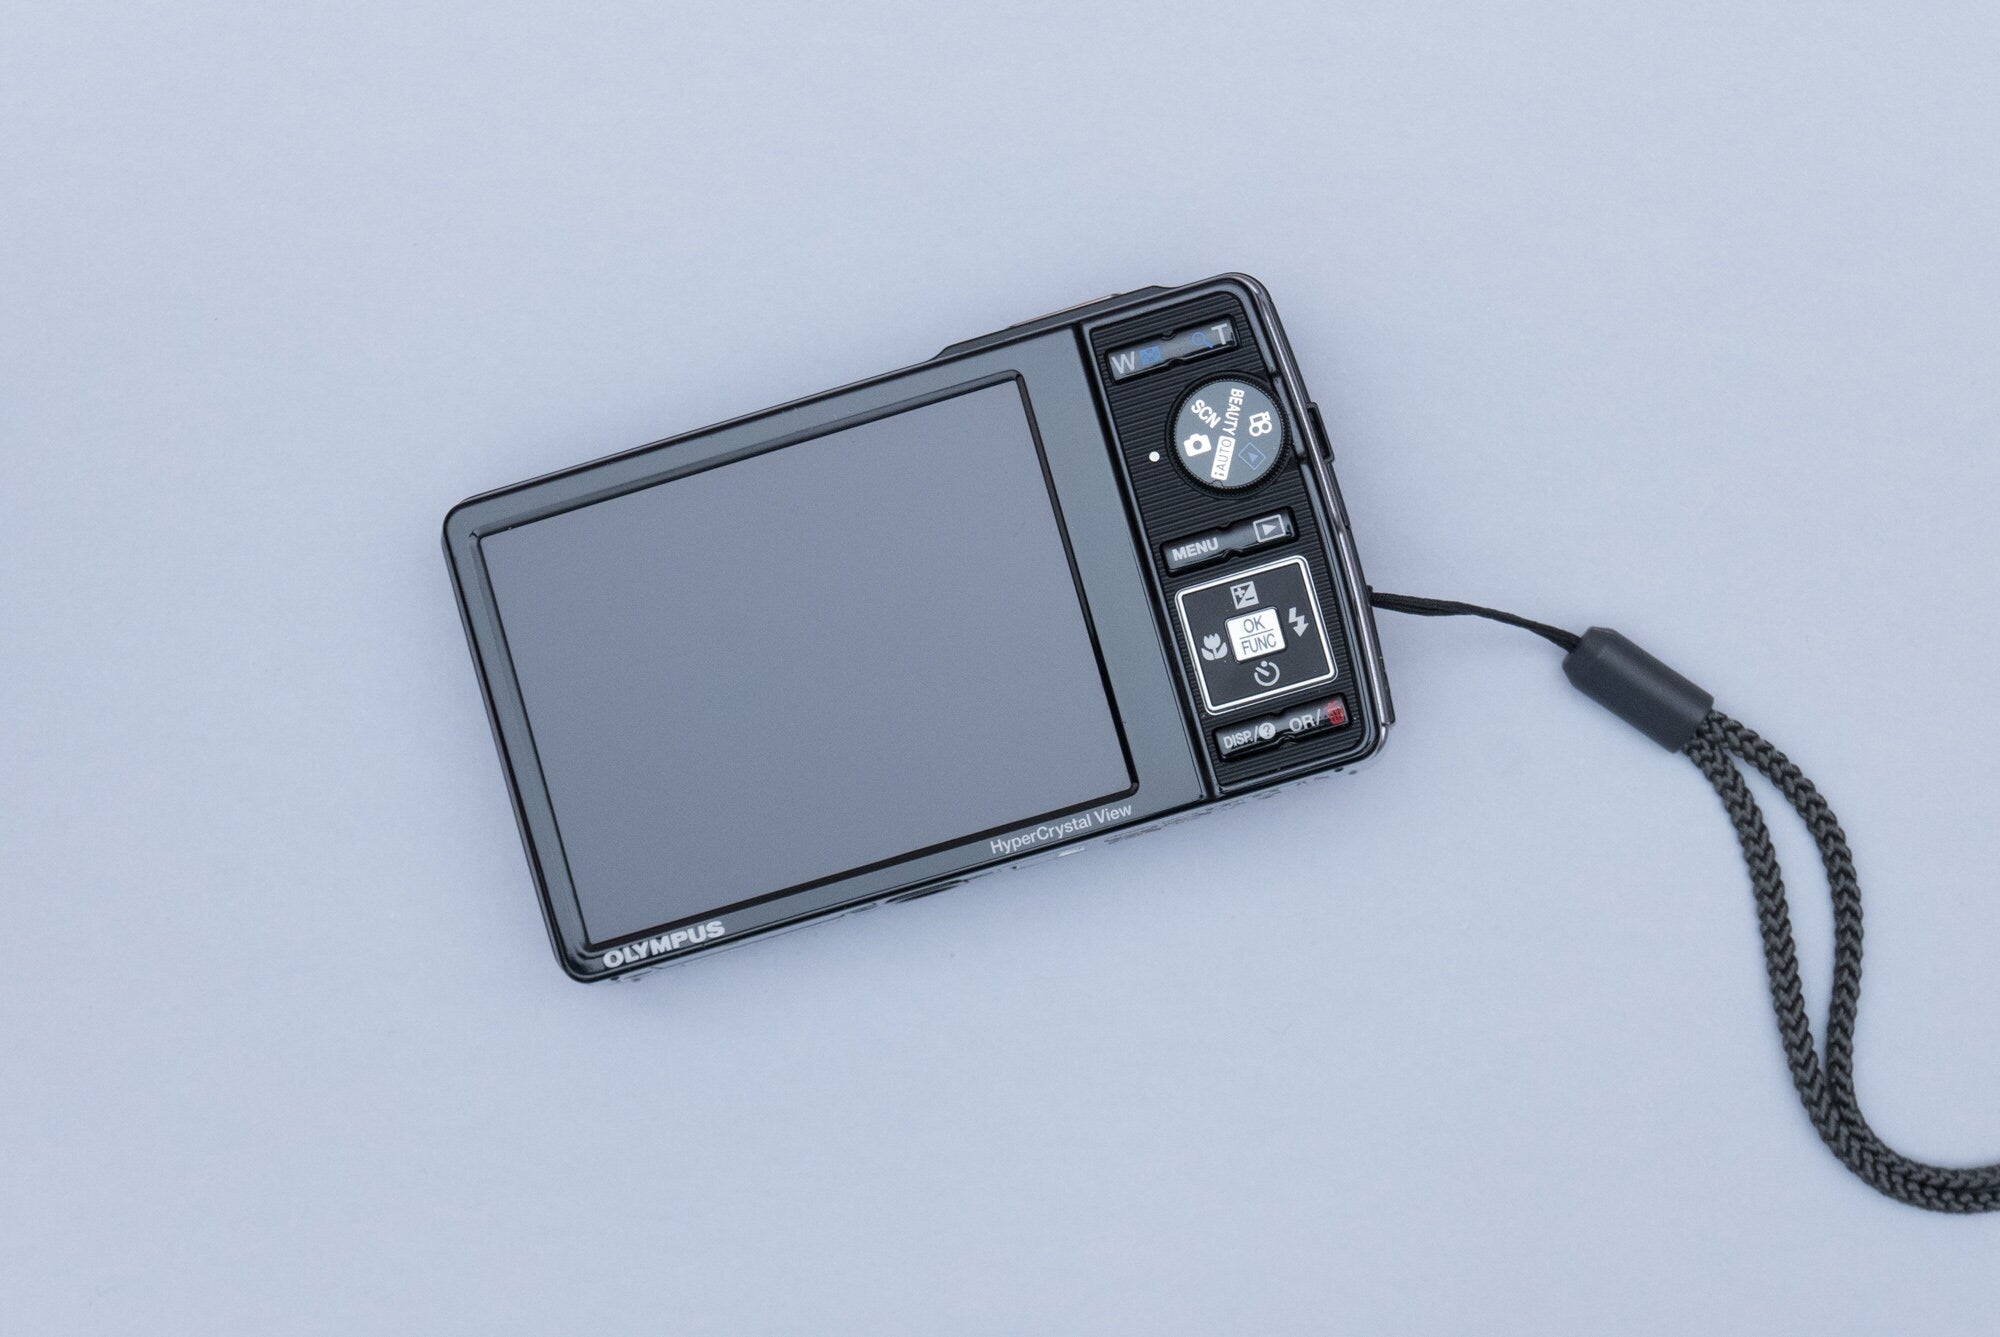 Olympus µ-7020 [mju] Compact Digital Camera – OHSOCULT Film Compacts